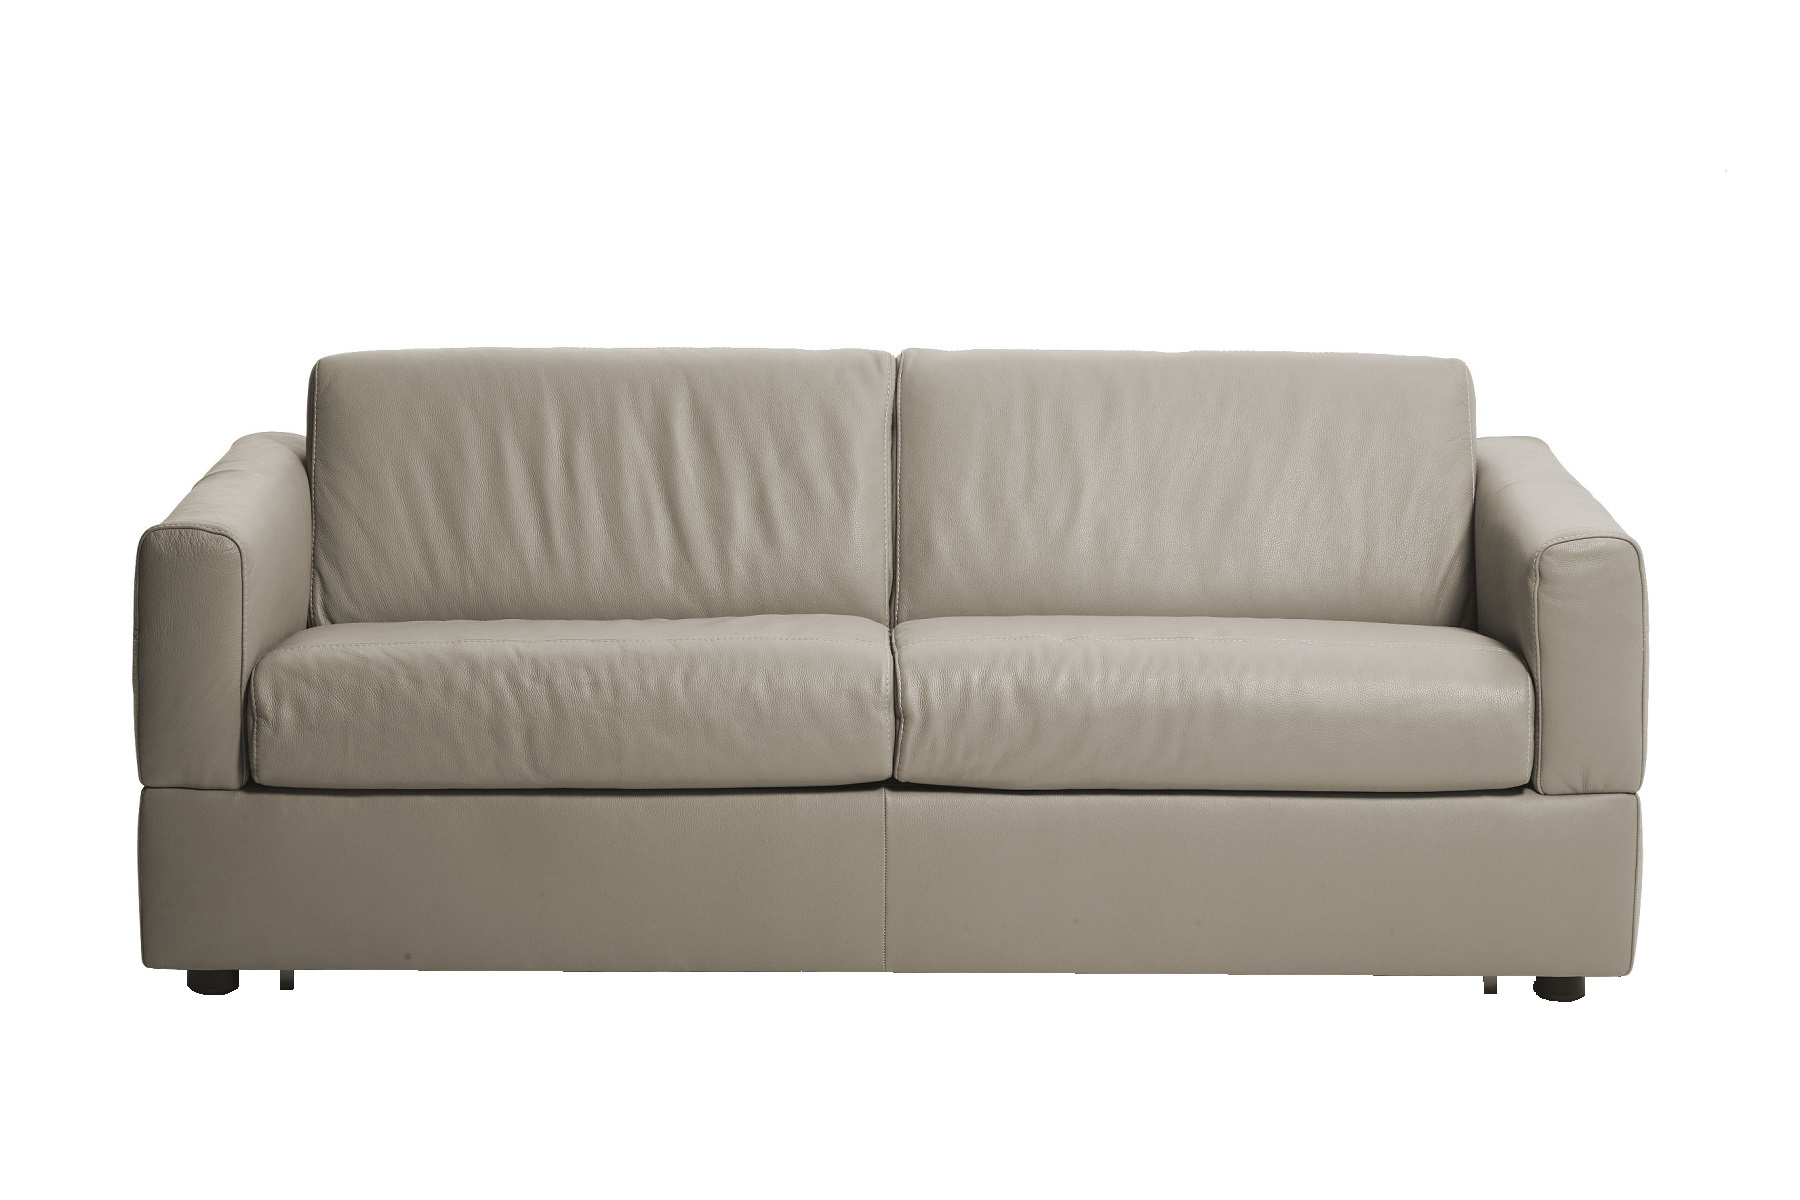 Visconti Leather Sofa Bed - Dark Grey